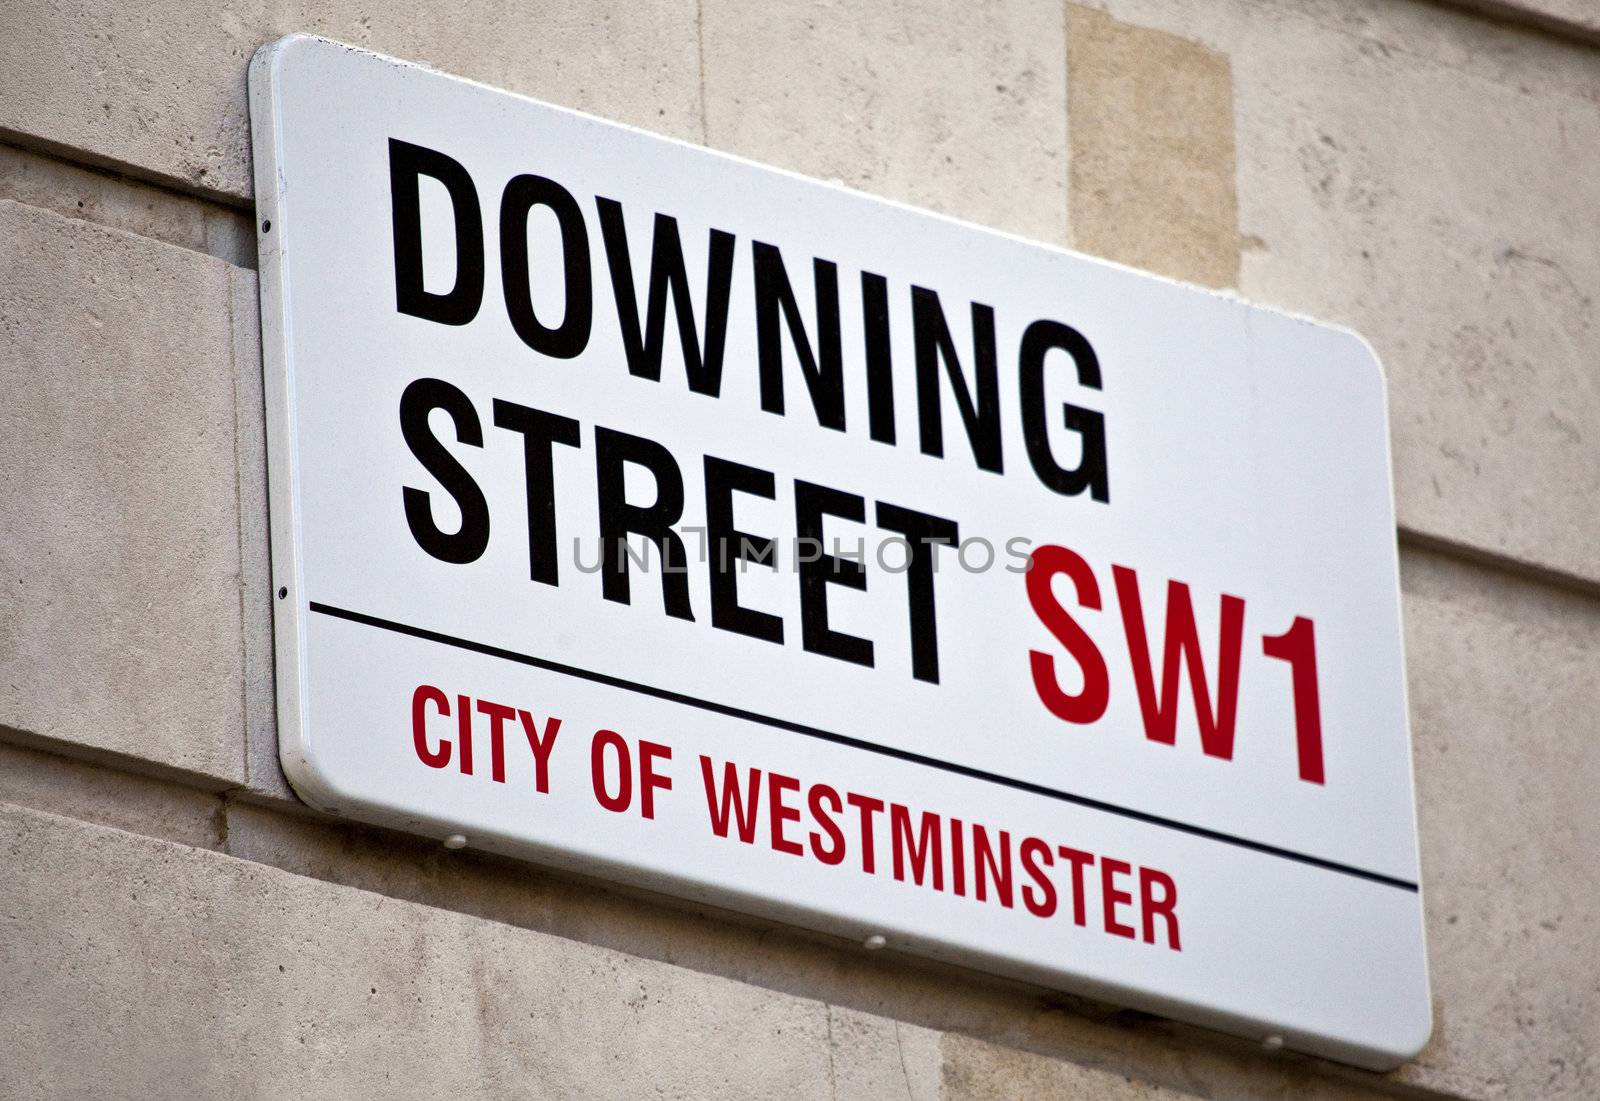 Downing Street in London.